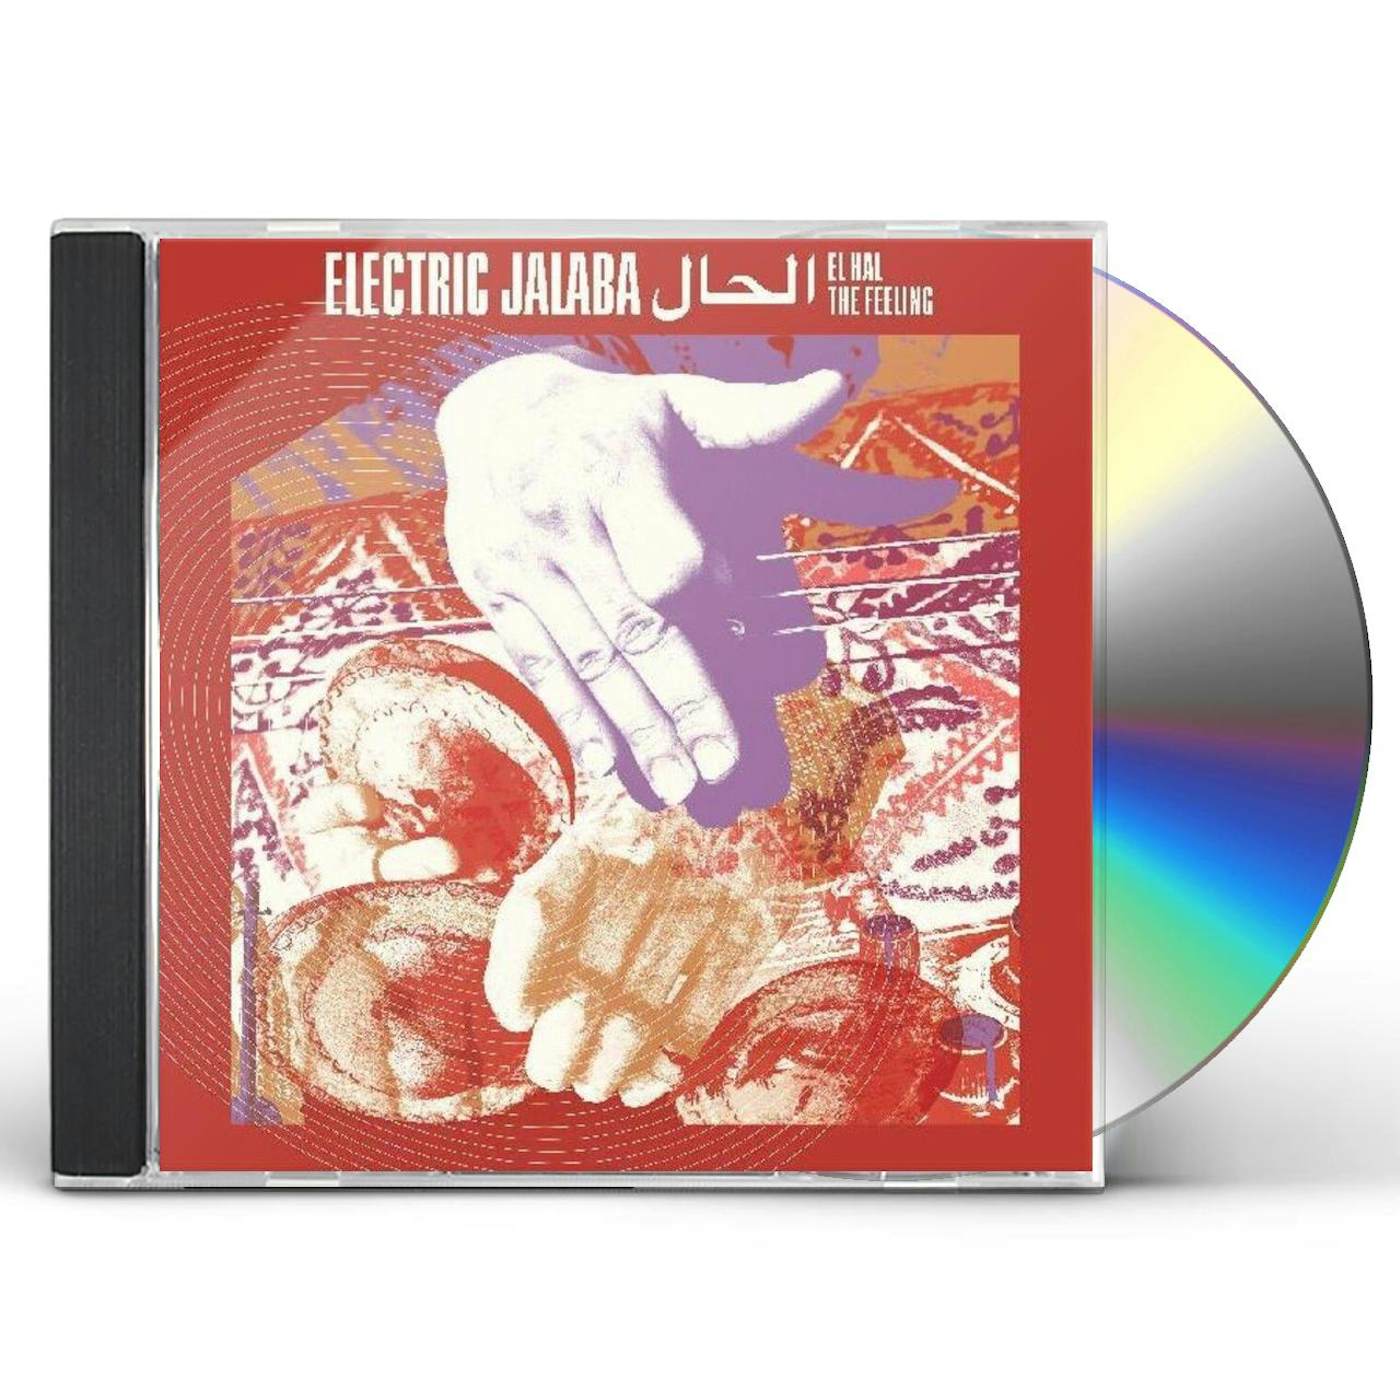 Electric Jalaba EL HAL THE FEELING CD